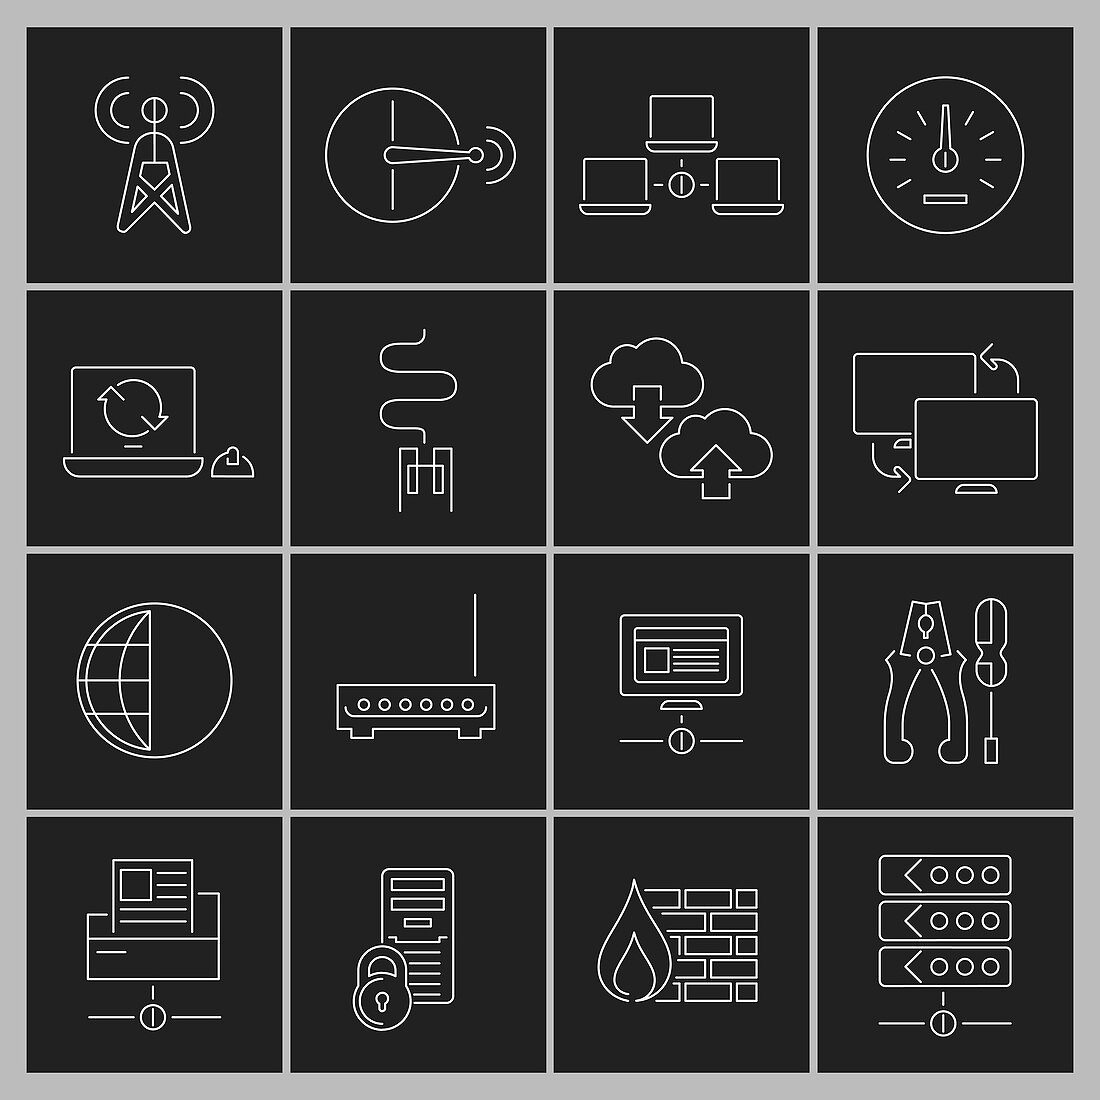 Computer network icons, illustration